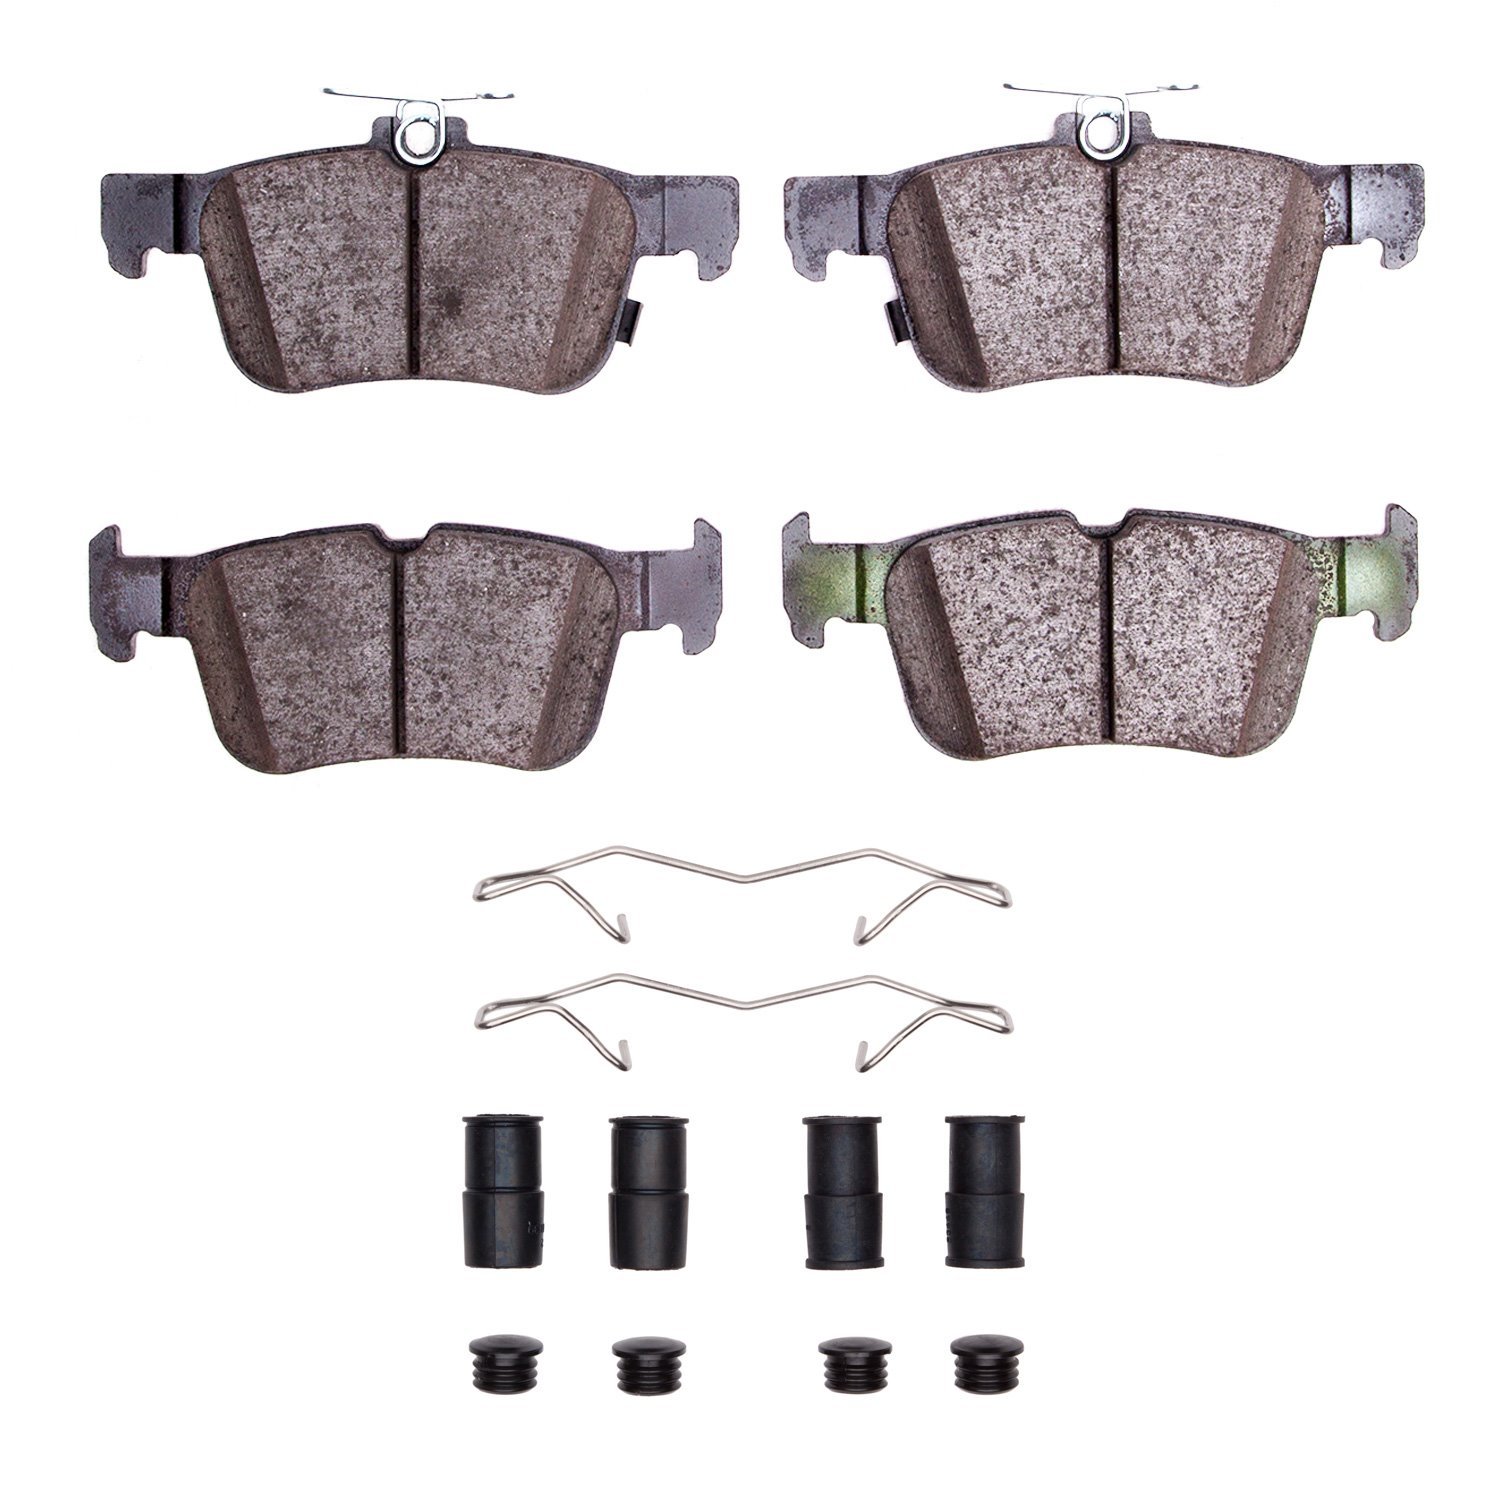 1551-1665-01 5000 Advanced Ceramic Brake Pads & Hardware Kit, Fits Select Ford/Lincoln/Mercury/Mazda, Position: Rear